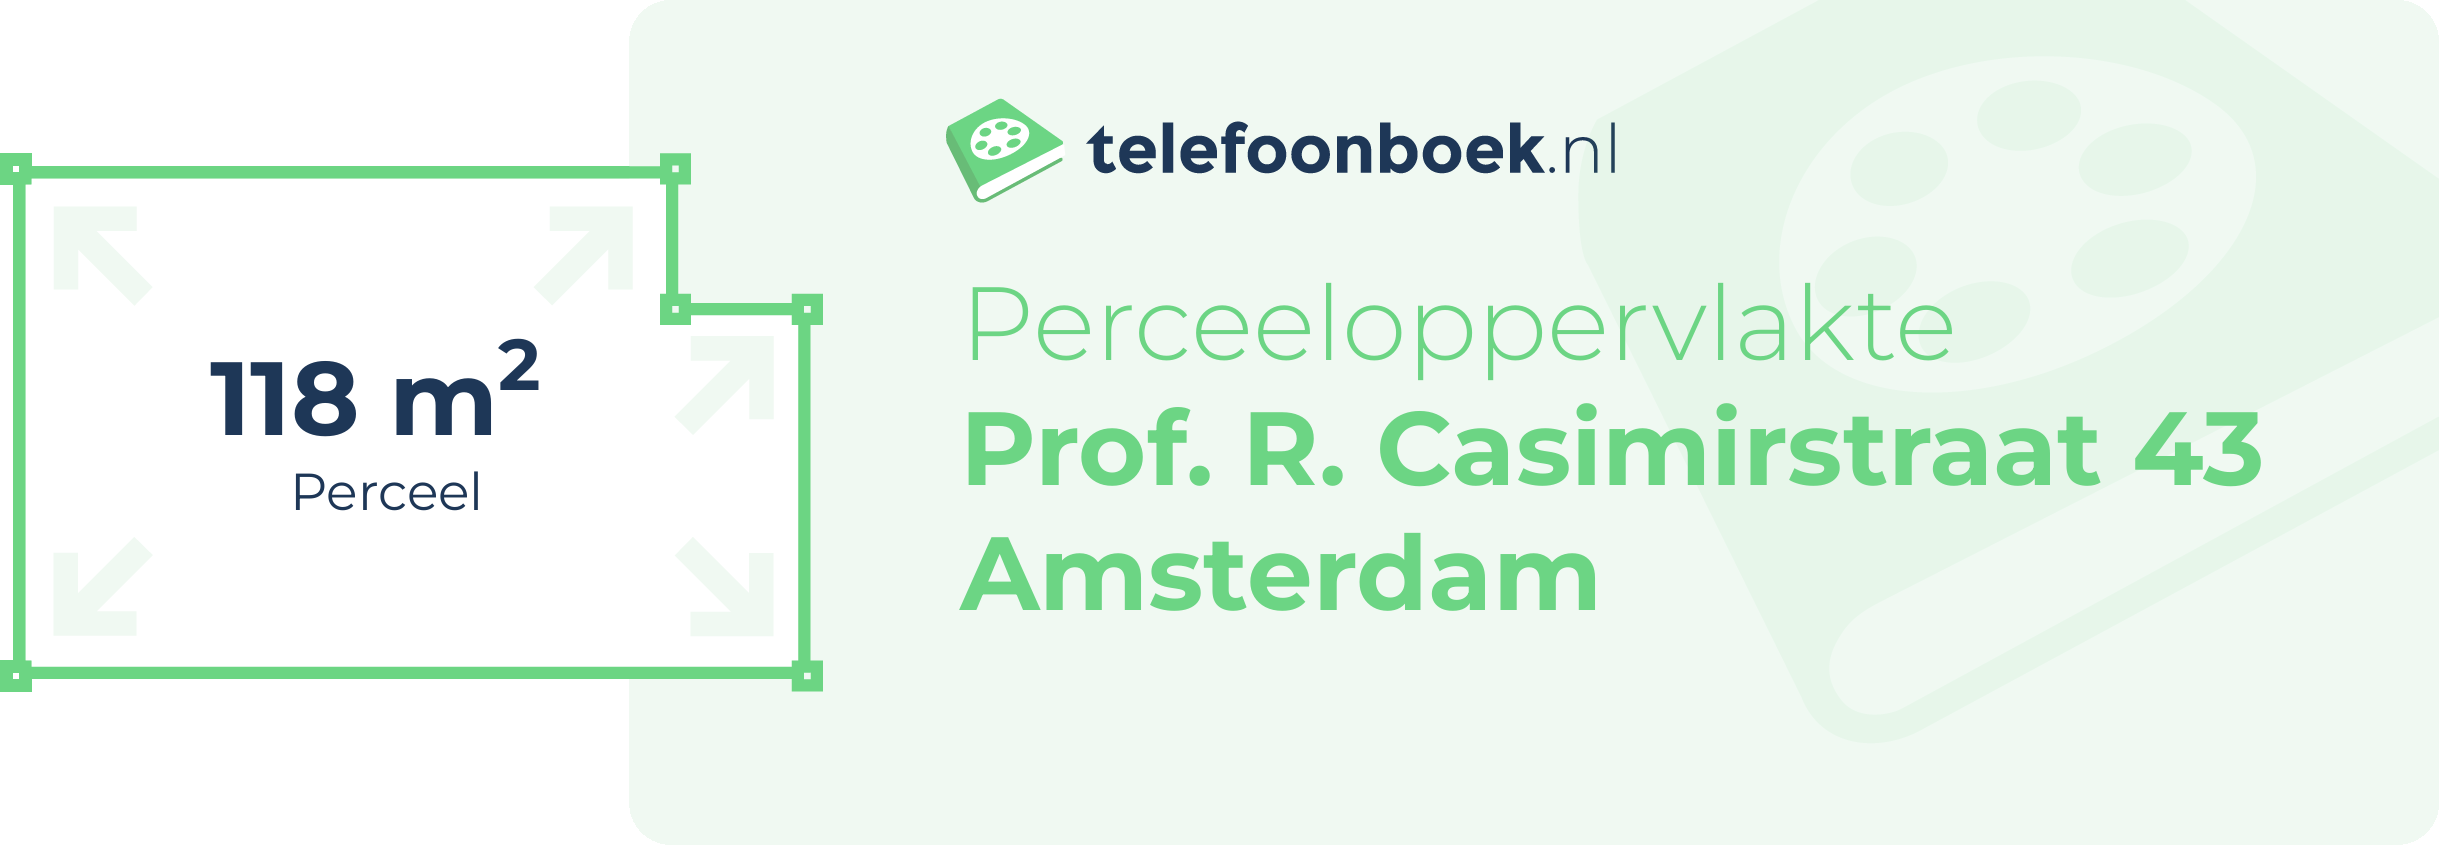 Perceeloppervlakte Prof. R. Casimirstraat 43 Amsterdam